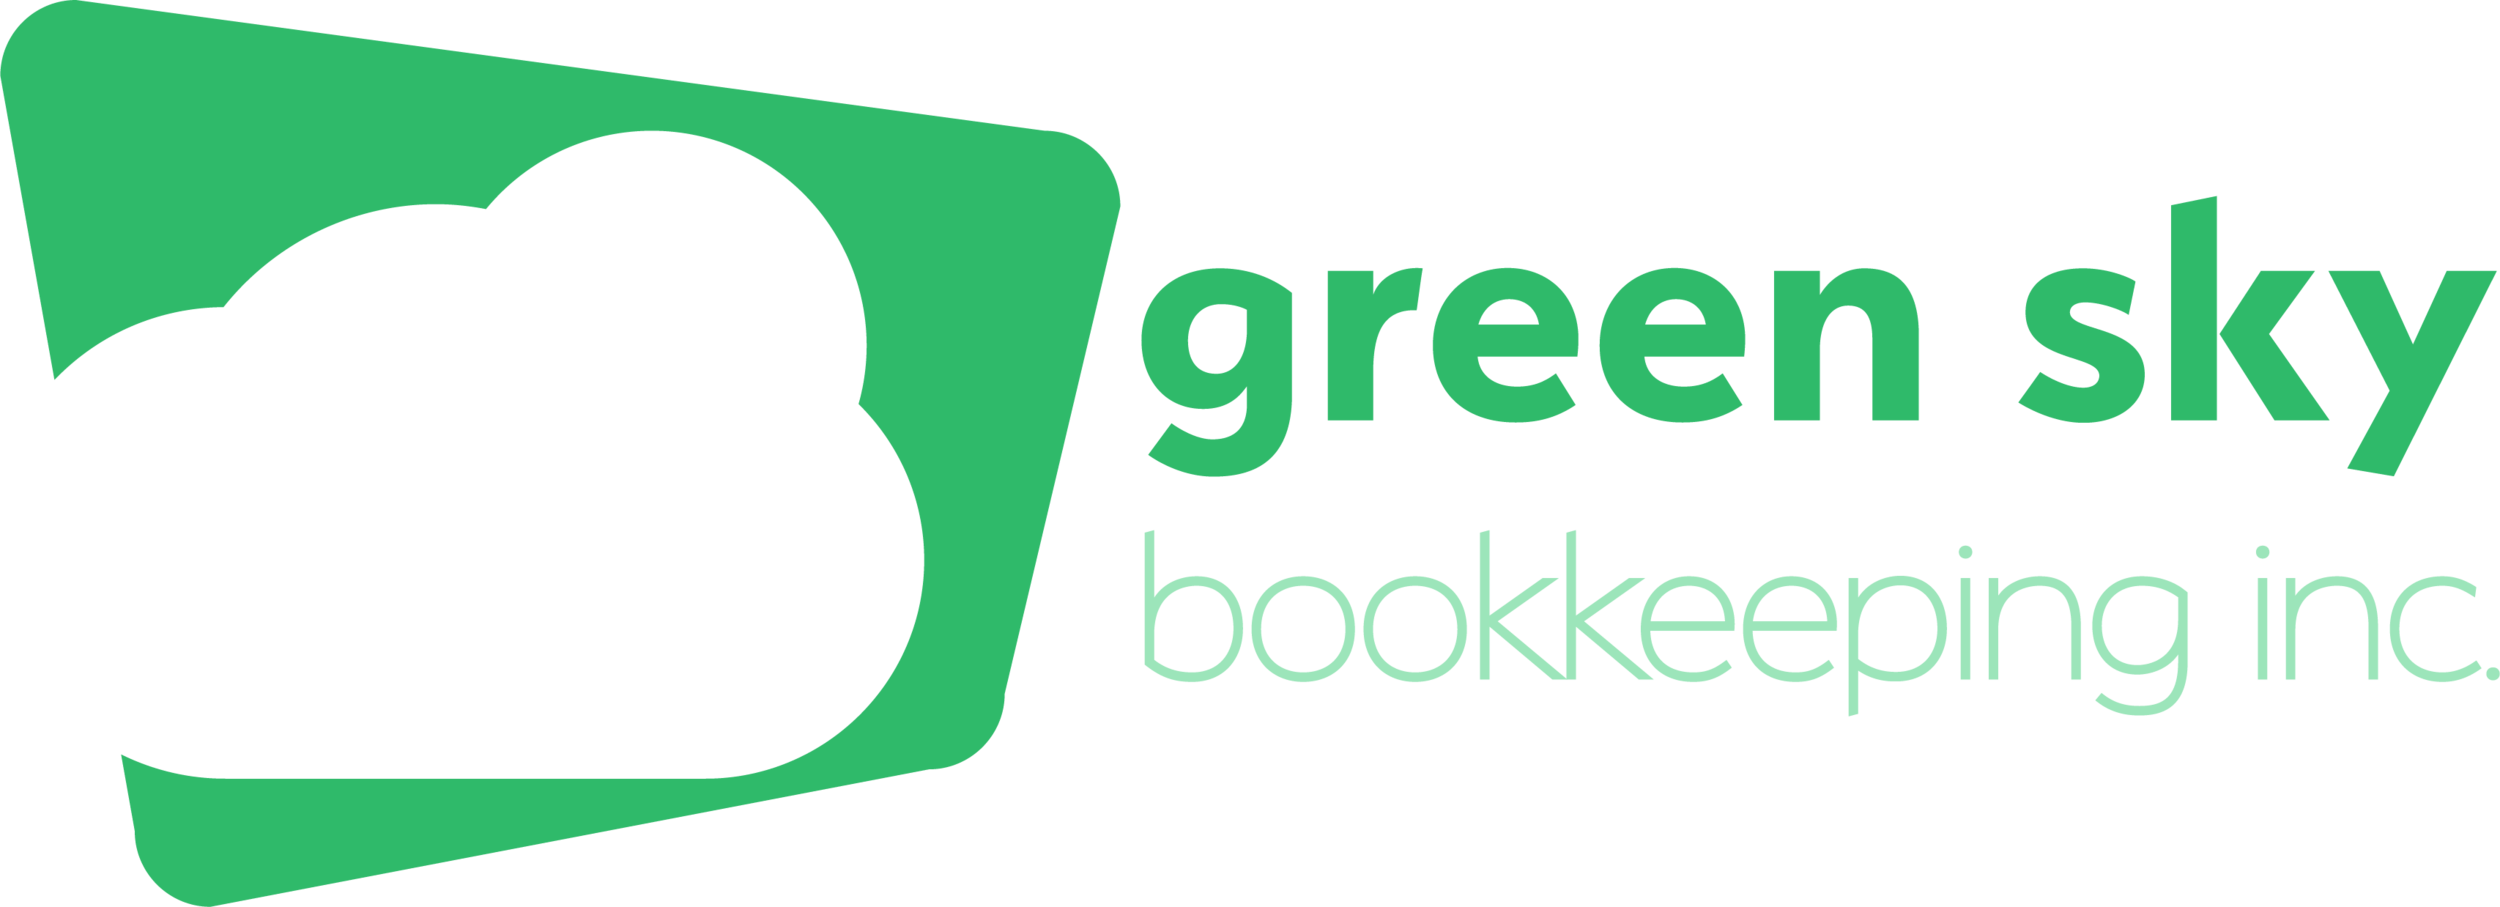 Green Sky Bookkeeping